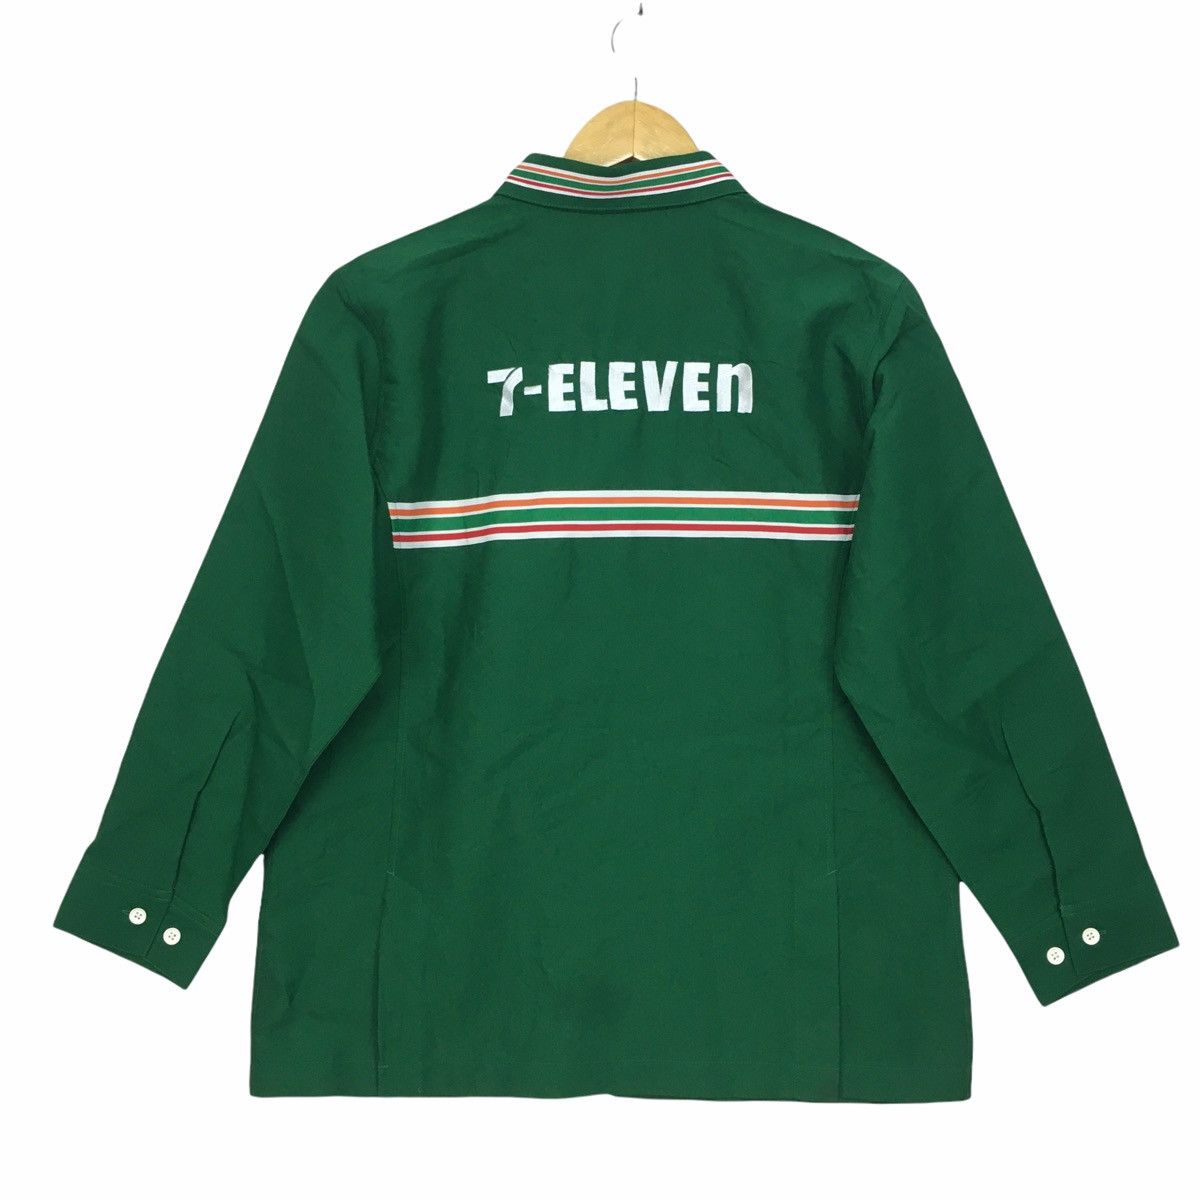 Vintage 7-ELEVEN Zip Up Shirt Spell Out 7 Eleven Worker Uniform Size US M / EU 48-50 / 2 - 6 Thumbnail